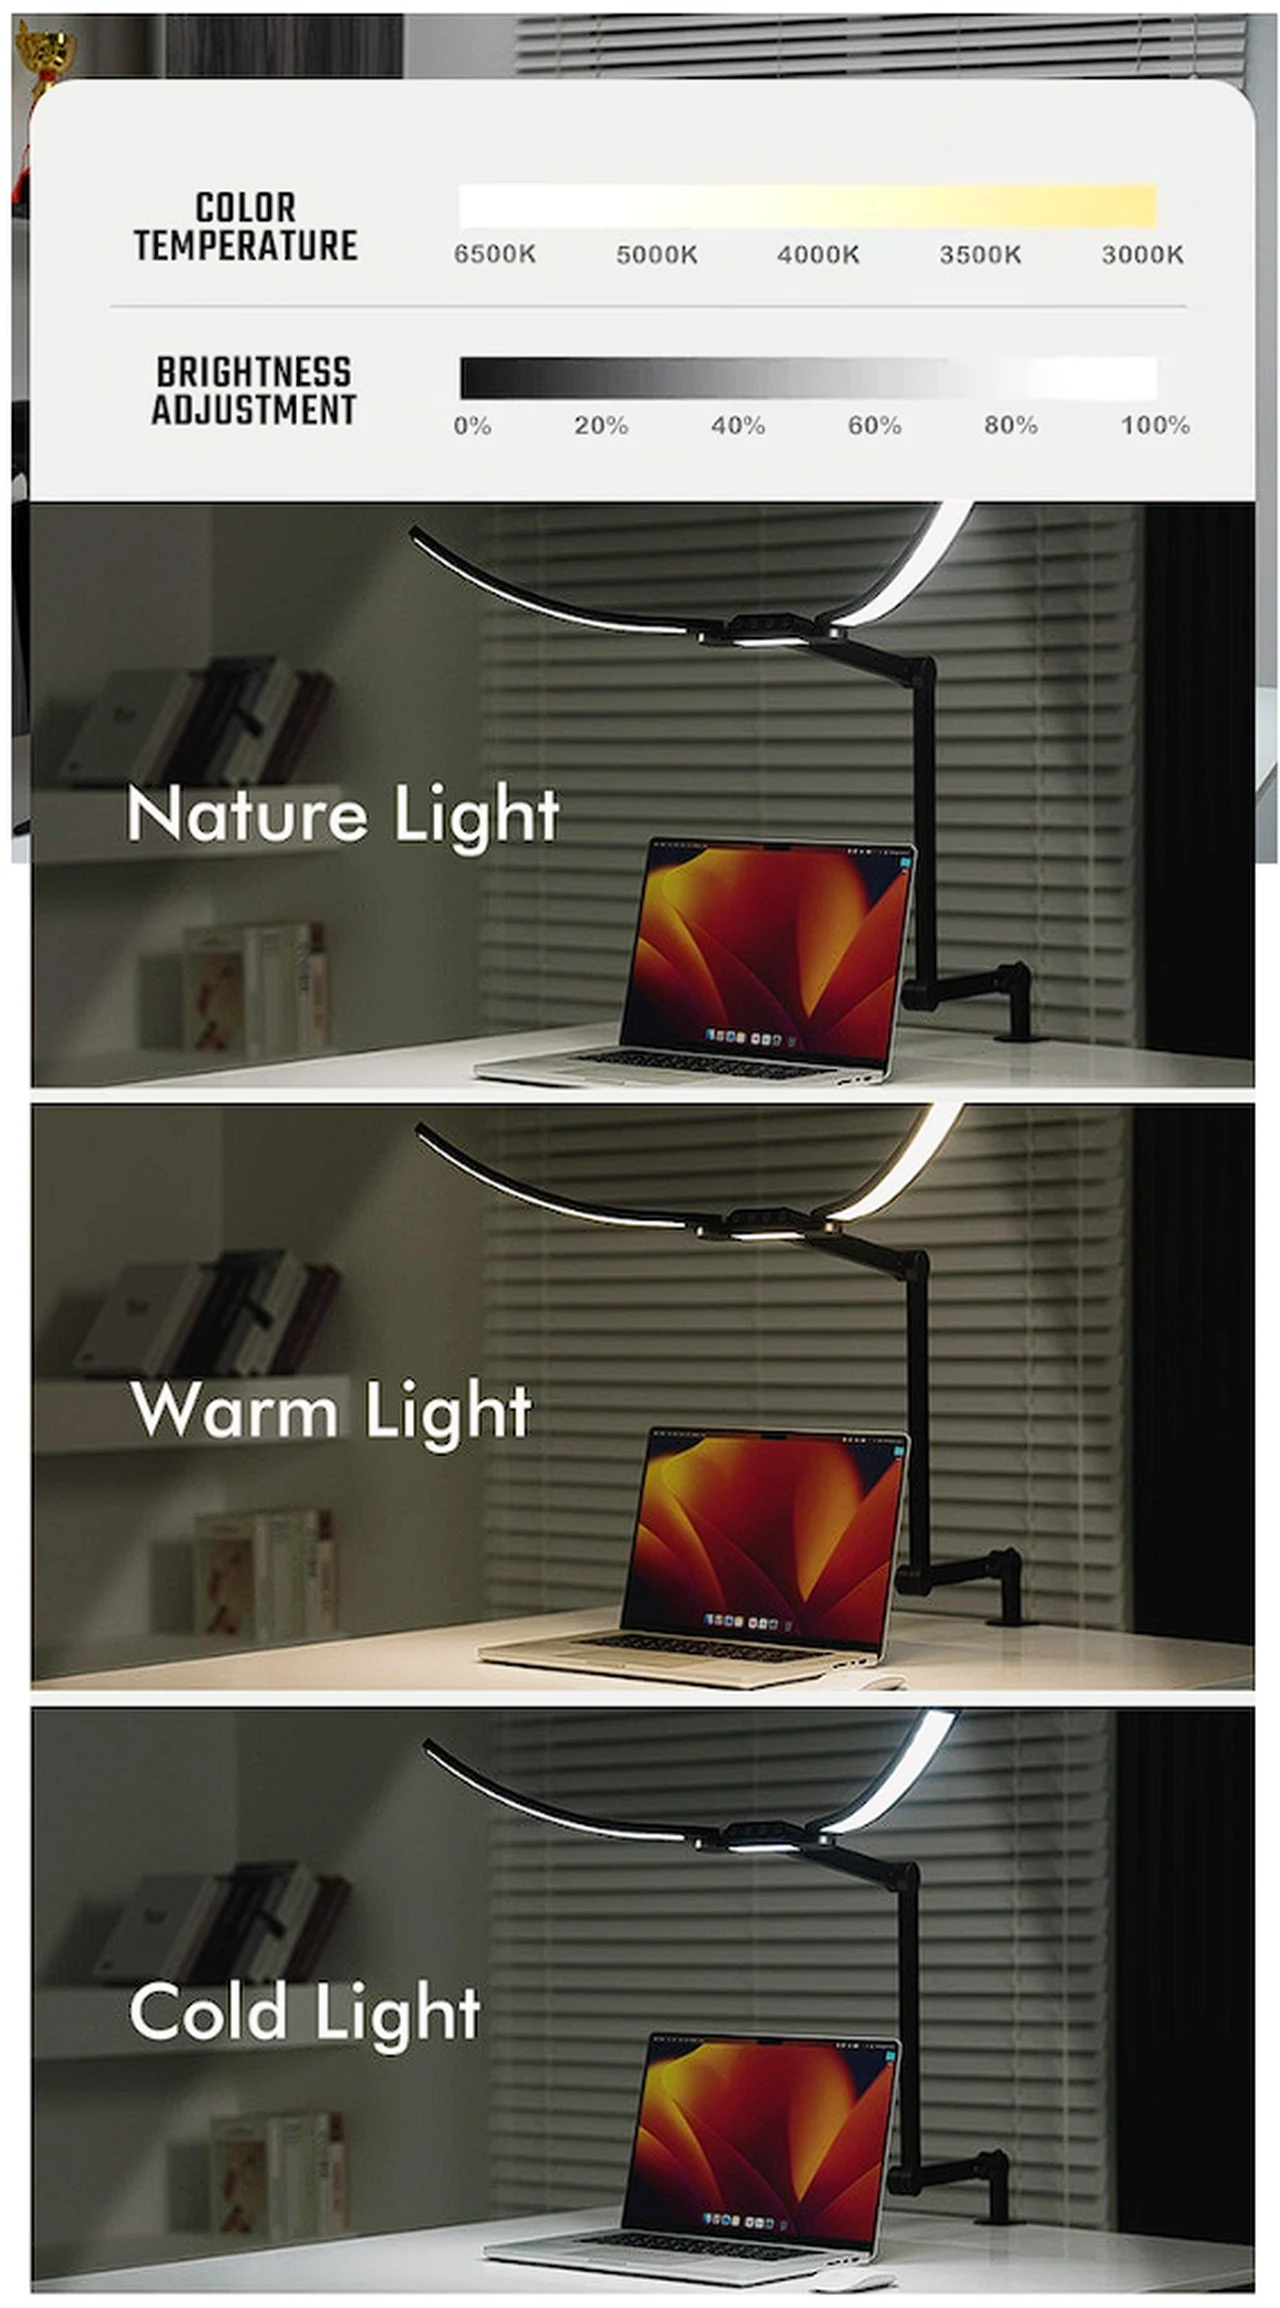 adjustable light color temperatures